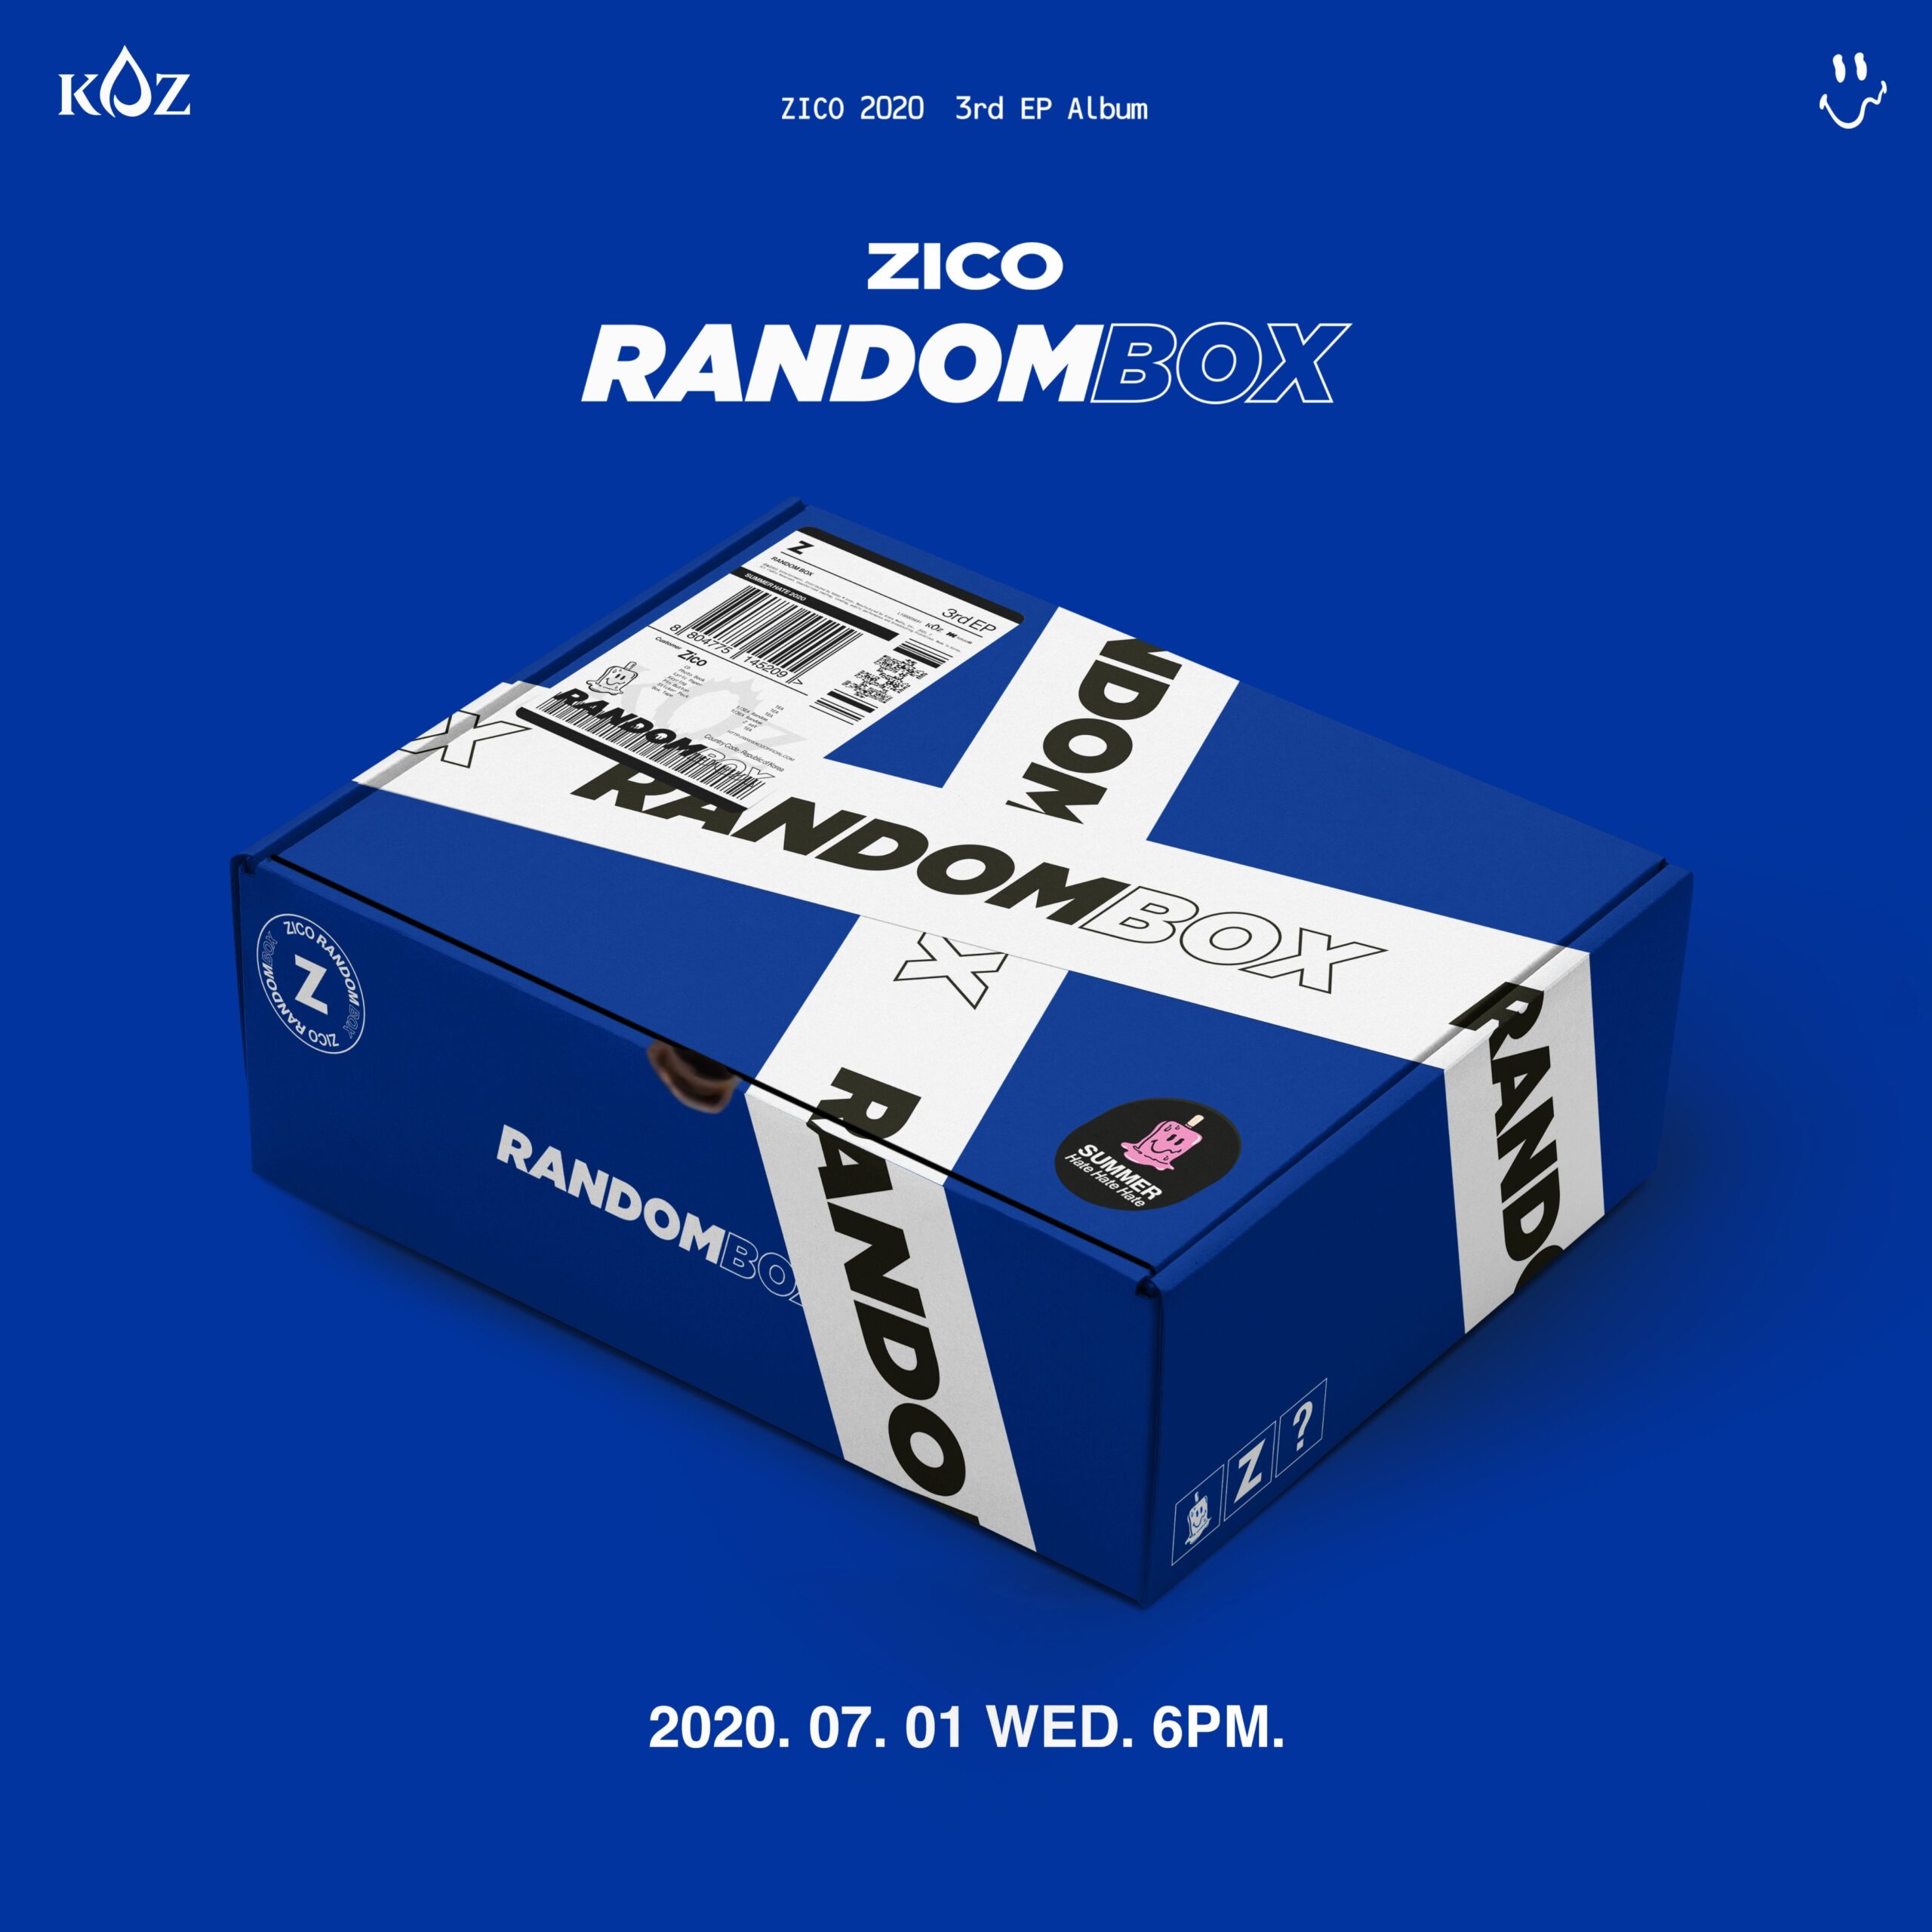 block-b-zico-reveal-surprise-comeback-with-3rd-mini-album-random-box-on-july-1-2